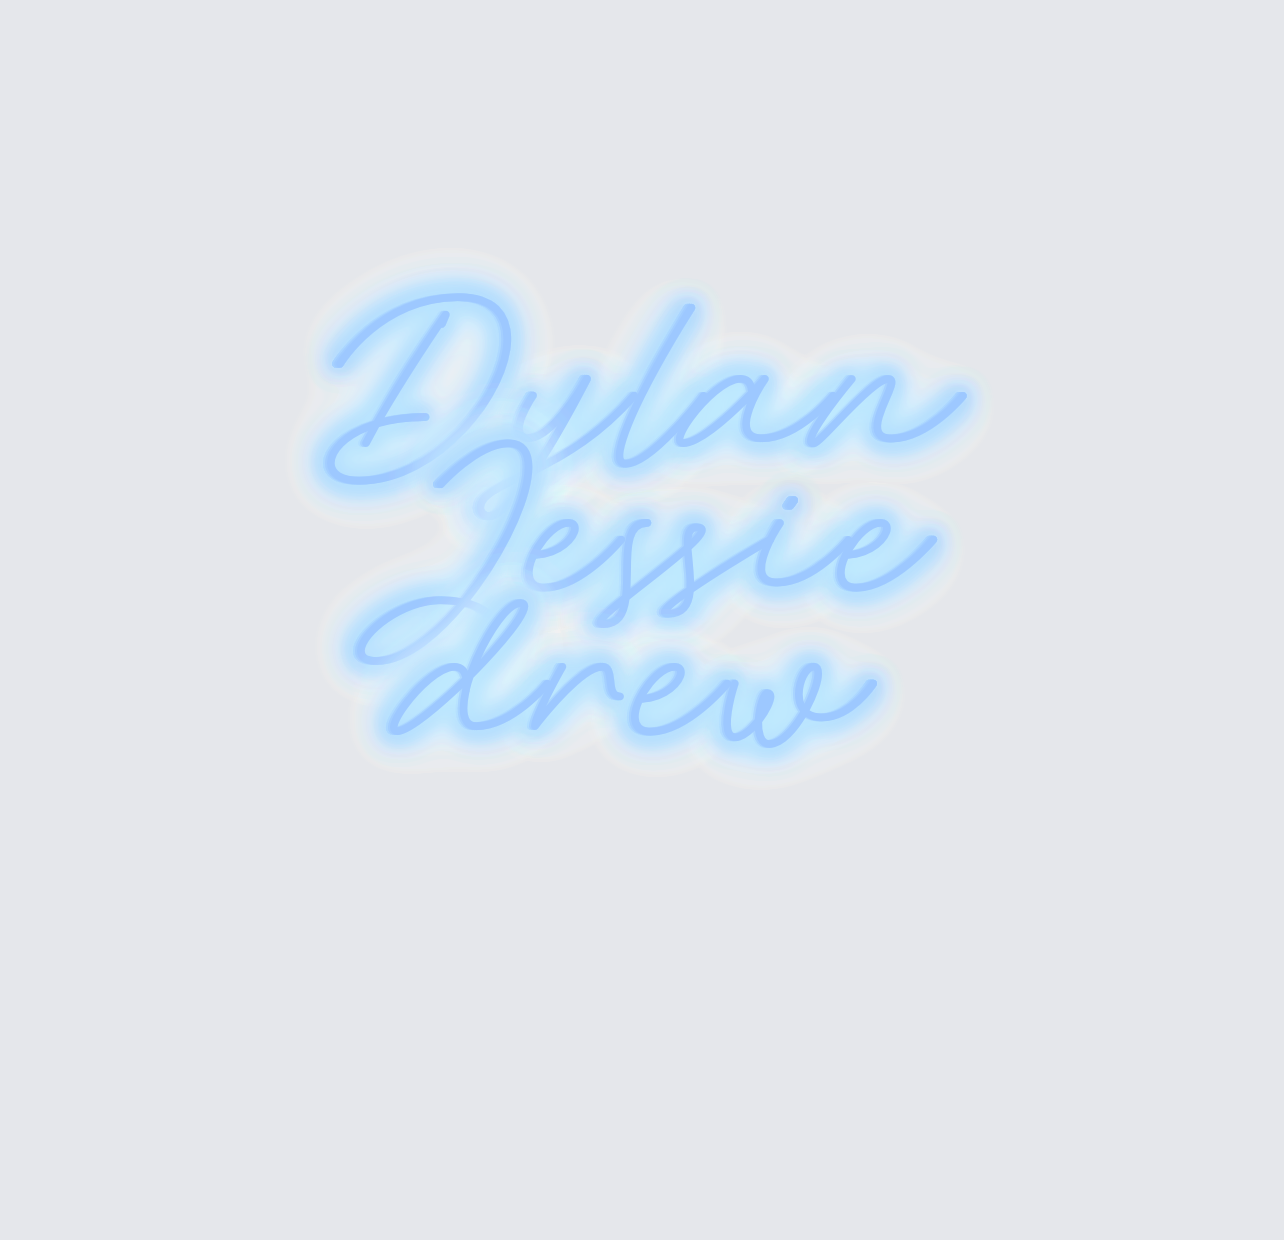 Custom neon sign - Dylan Jessie drew